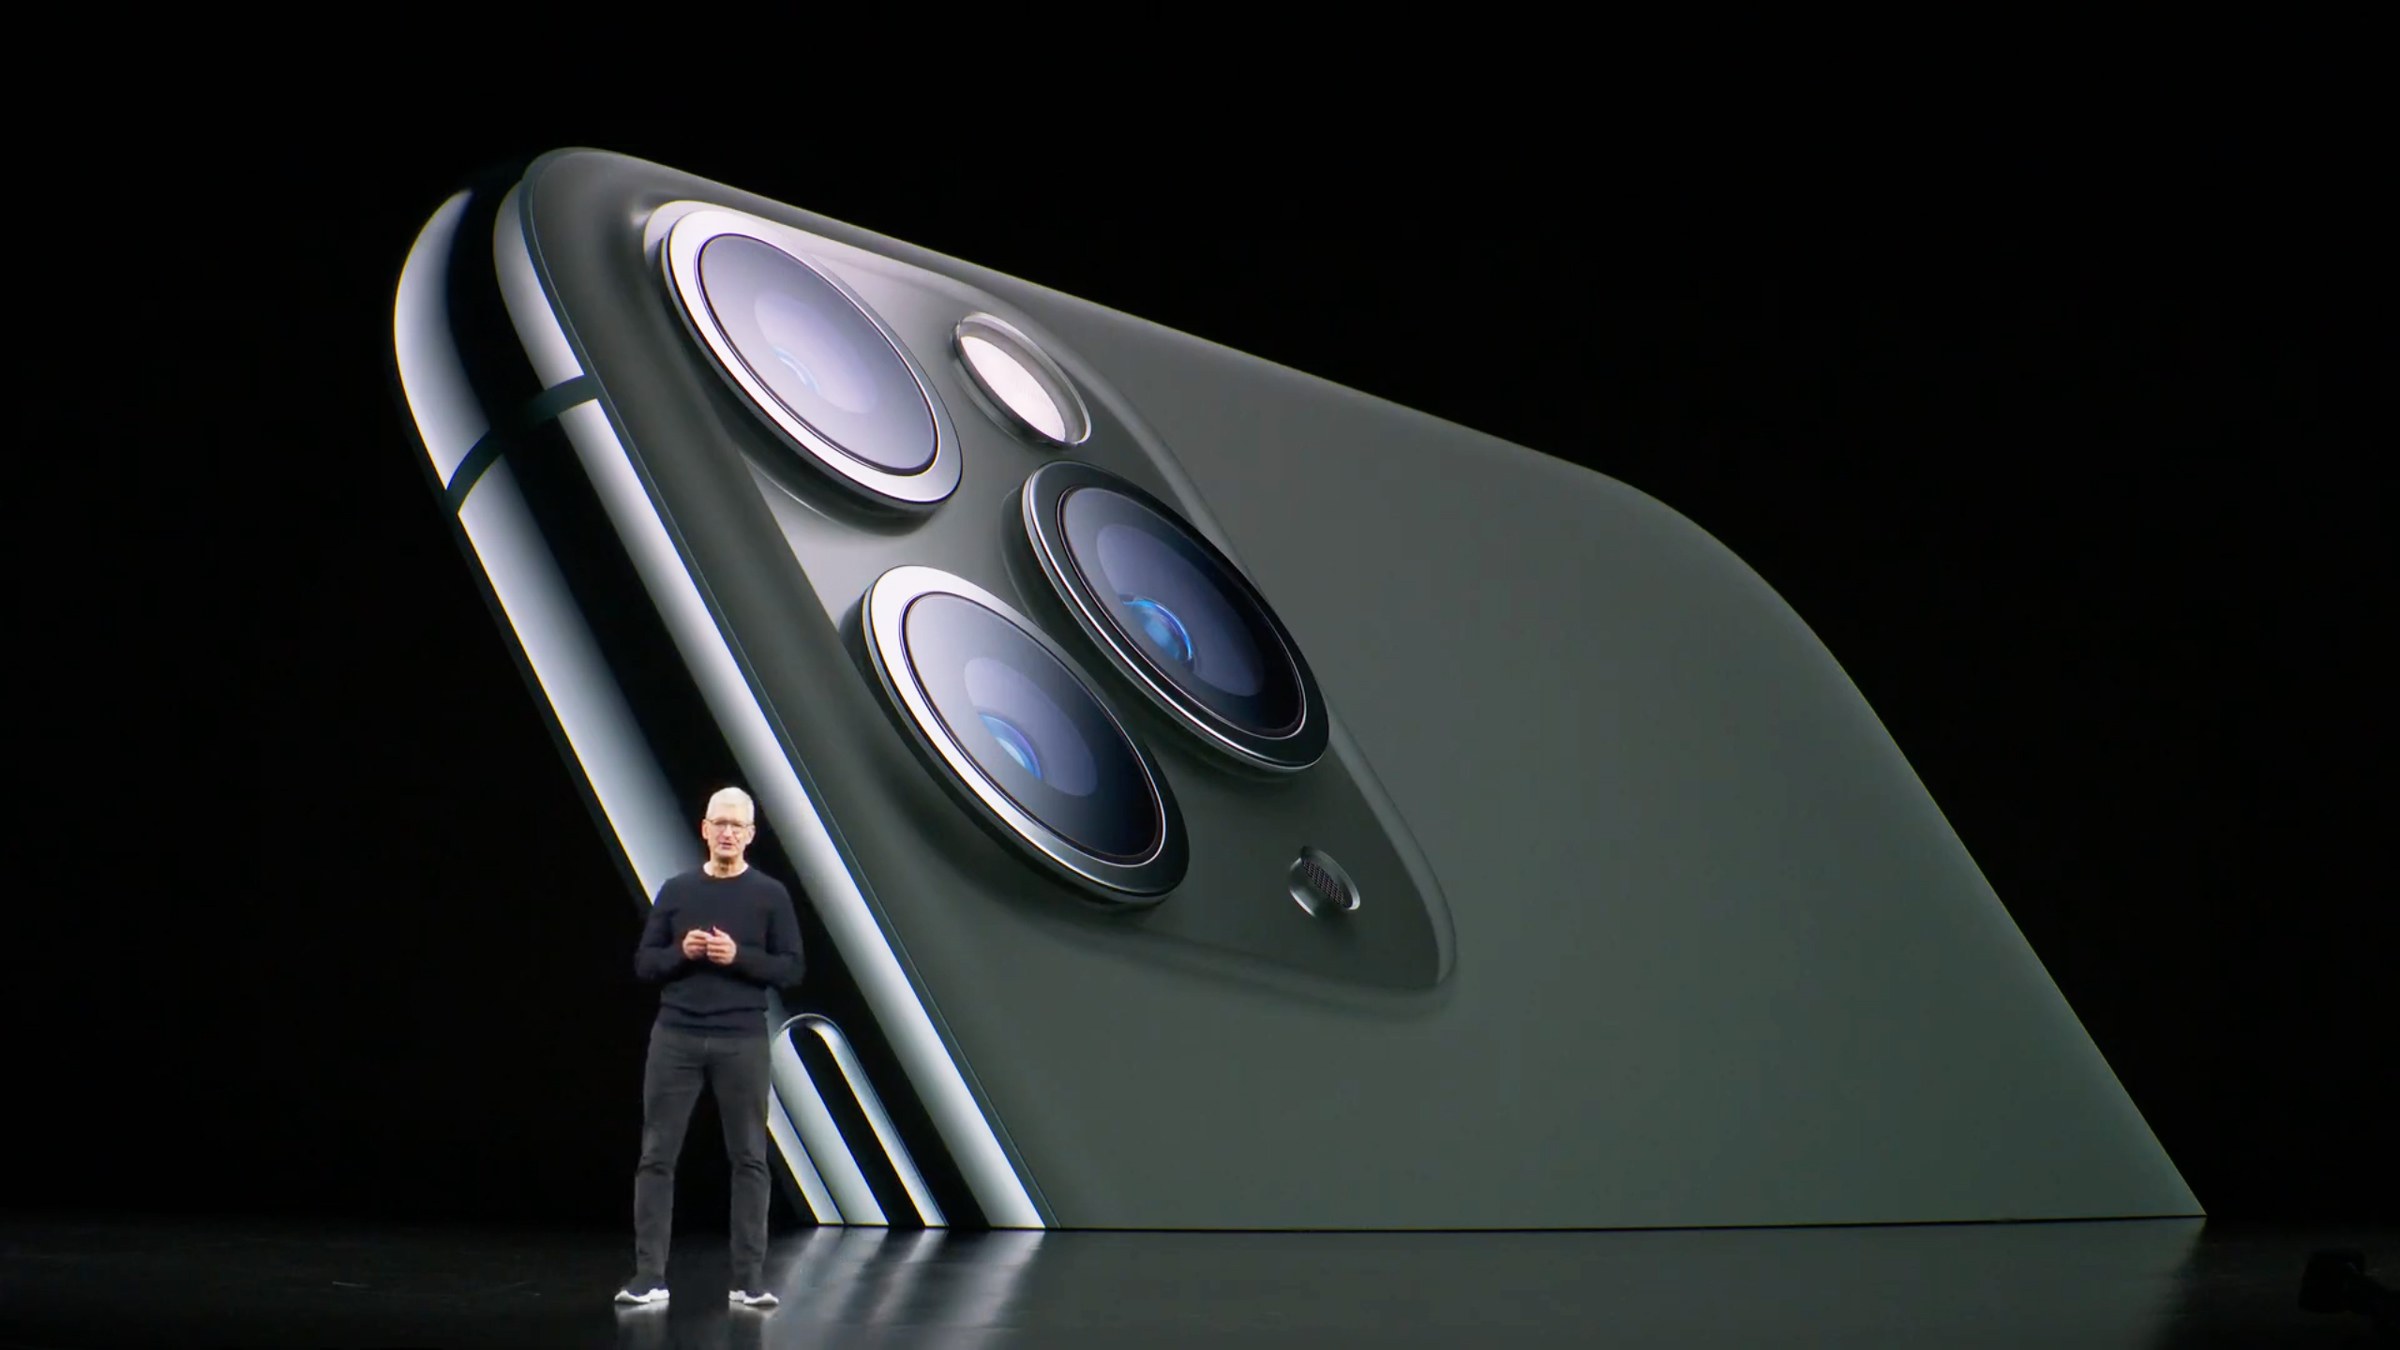 Apple iPhone 12 September 2020 Release Date